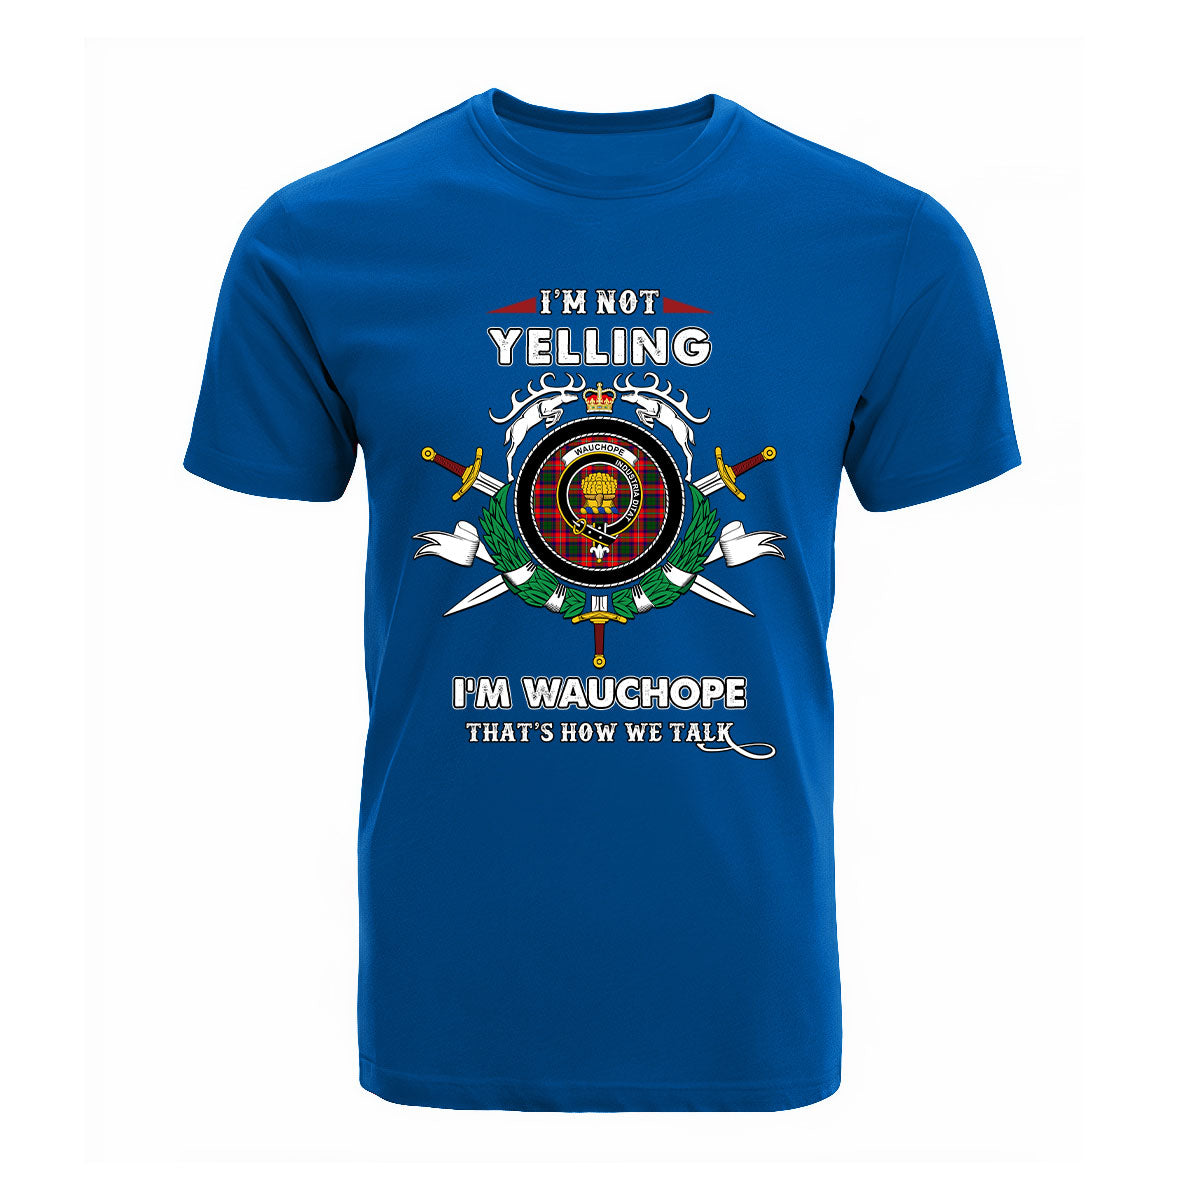 Wauchope Tartan Crest T-shirt - I'm not yelling style